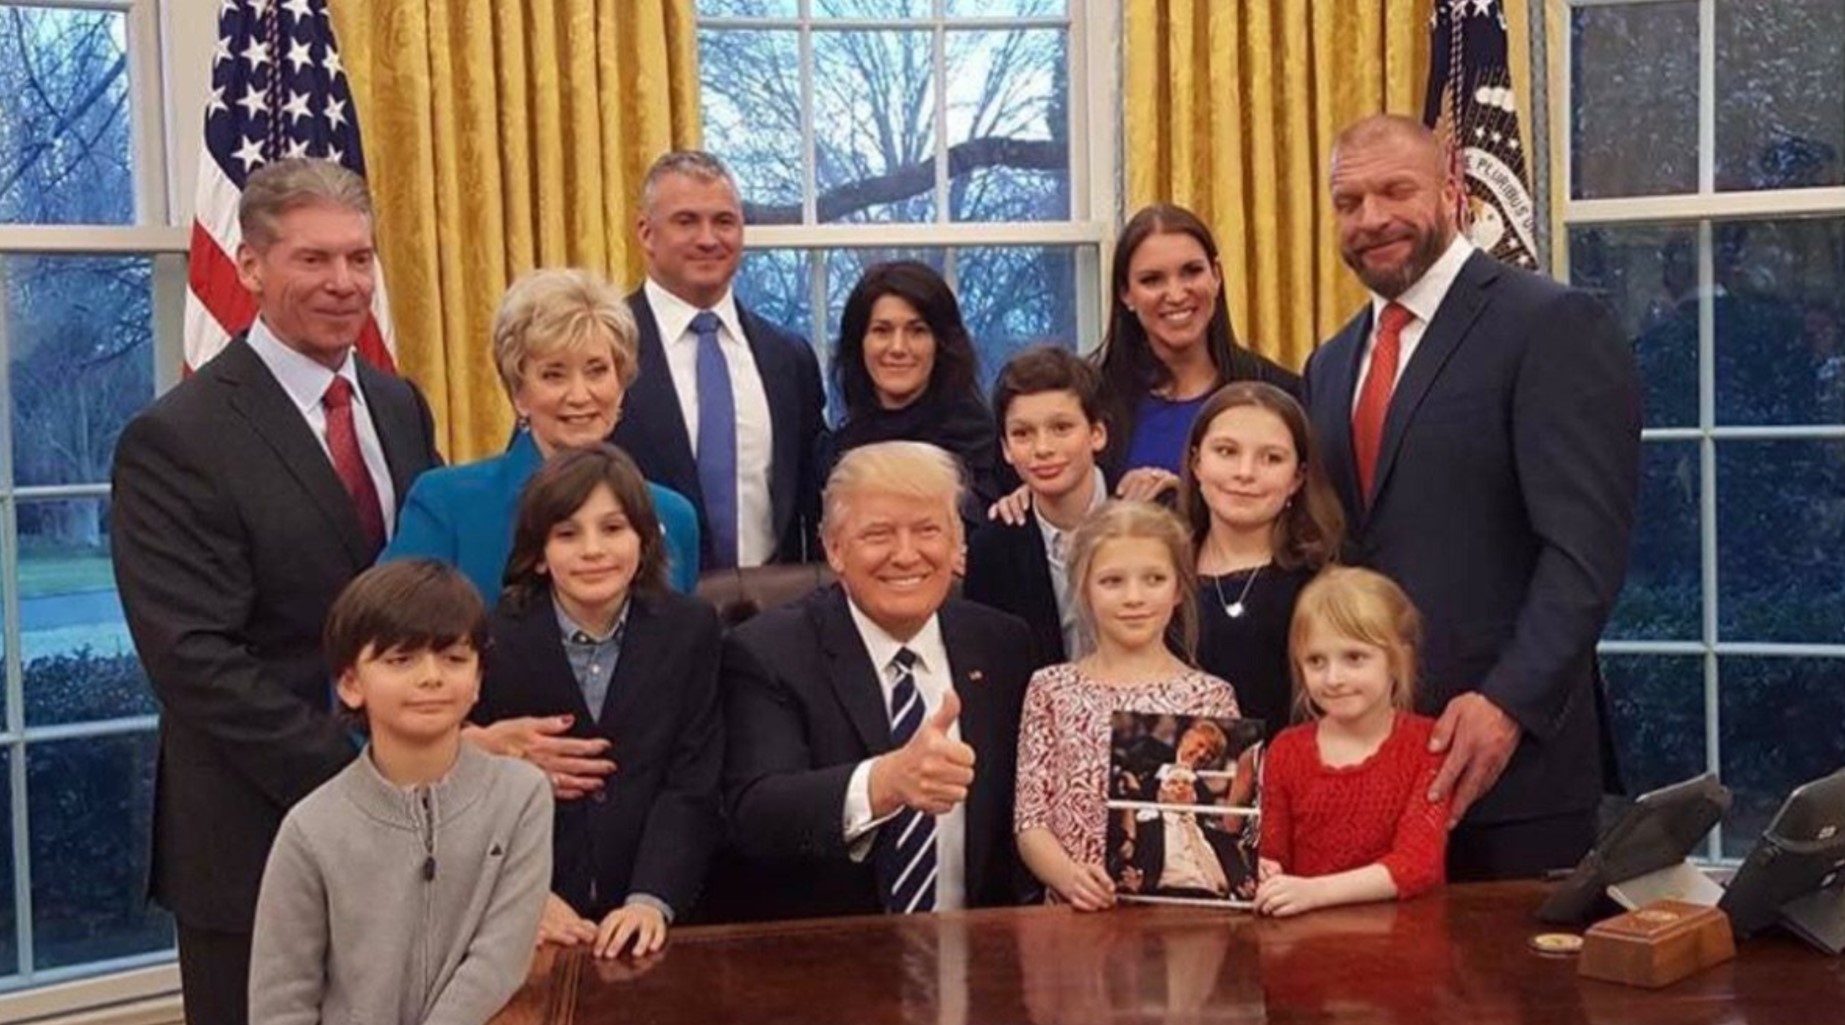 McMahon Family Visits President Trump